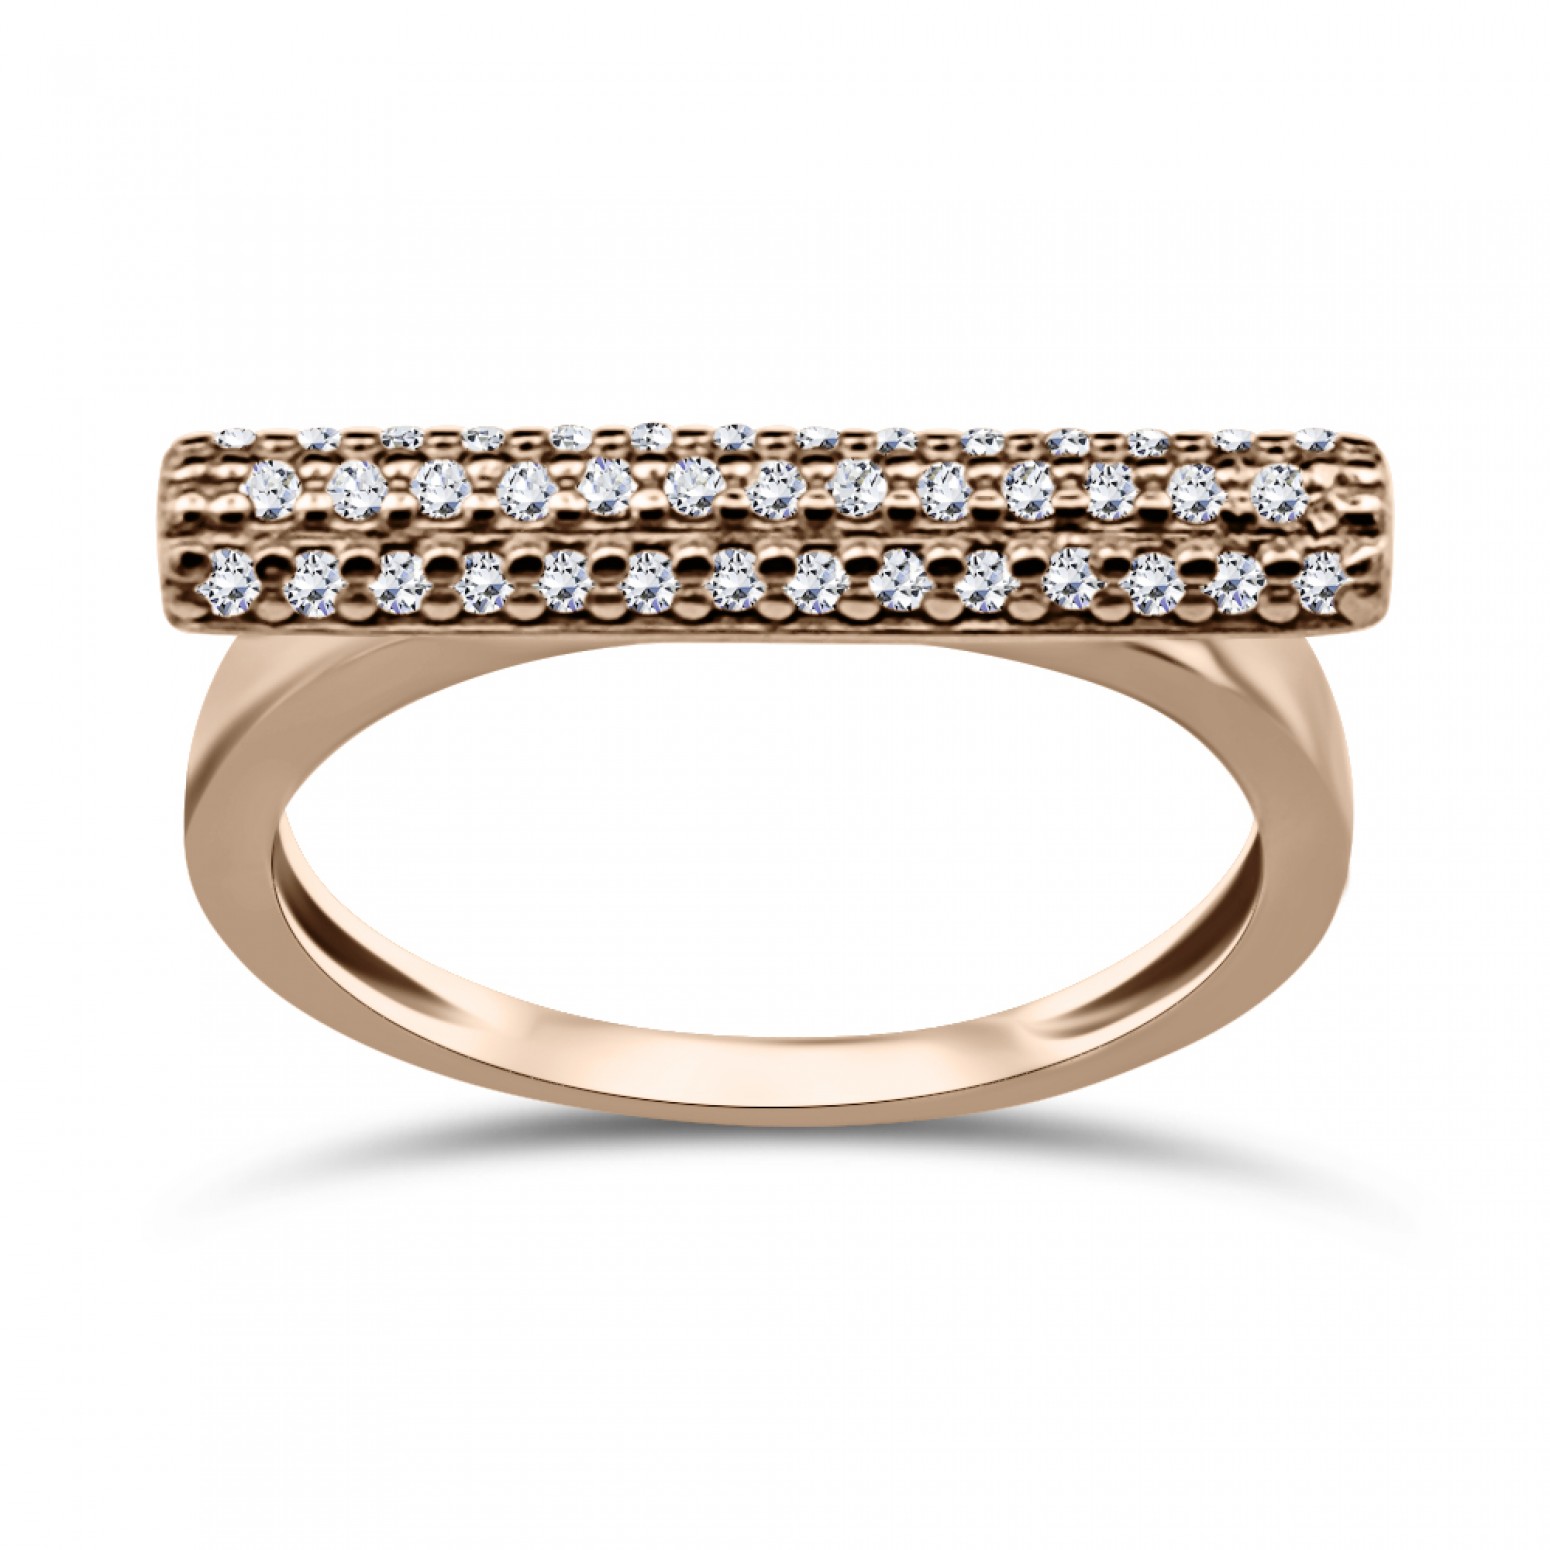 Multistone ring K9 pink gold with zircon, da3314 RINGS Κοσμηματα - chrilia.gr